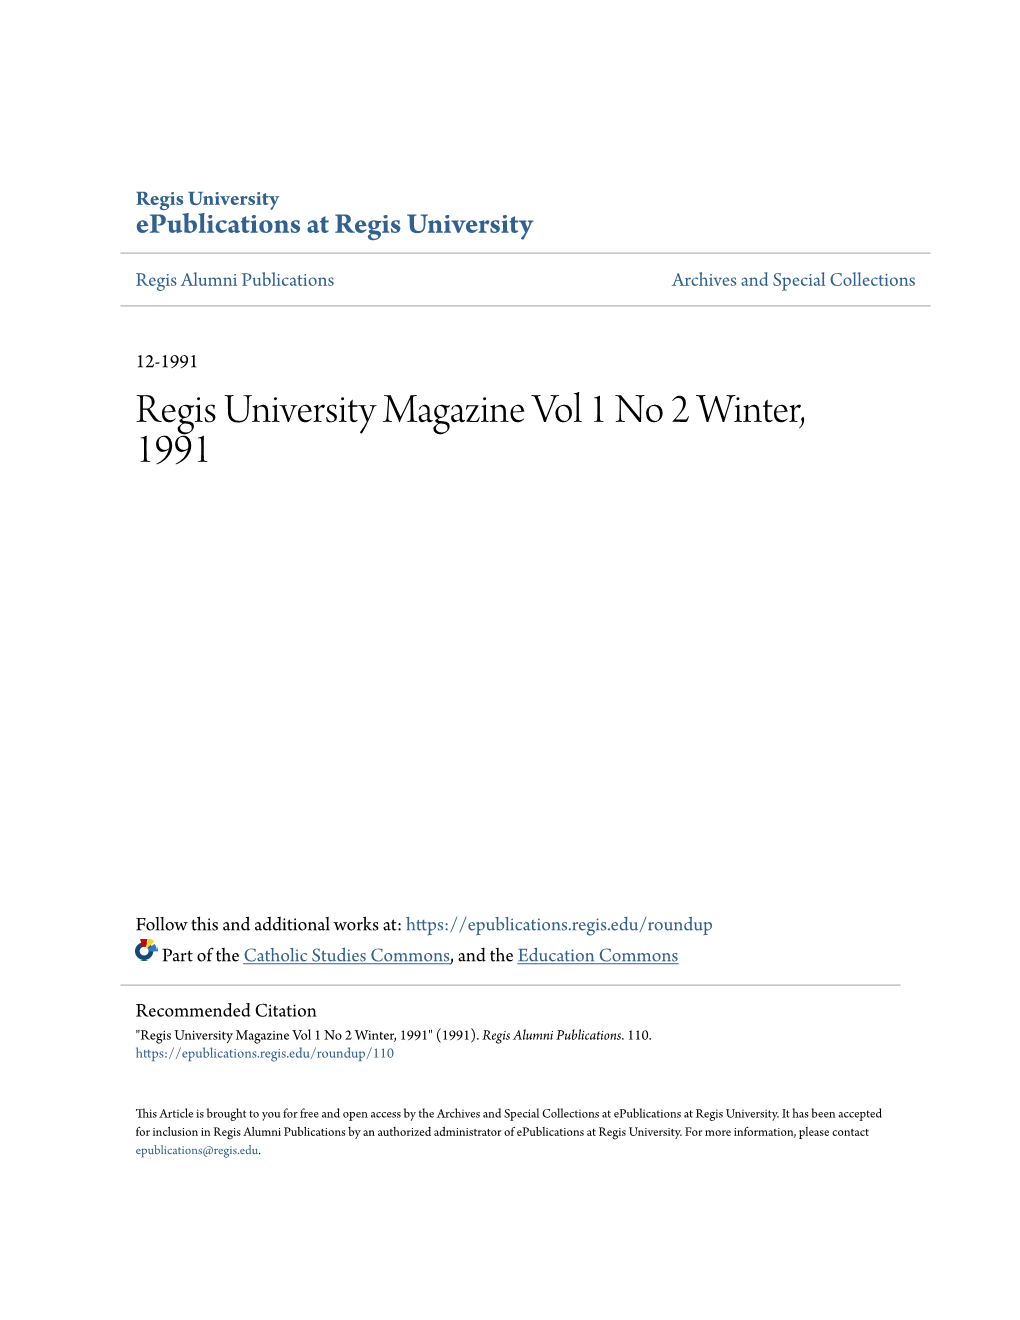 Regis University Magazine Vol 1 No 2 Winter, 1991